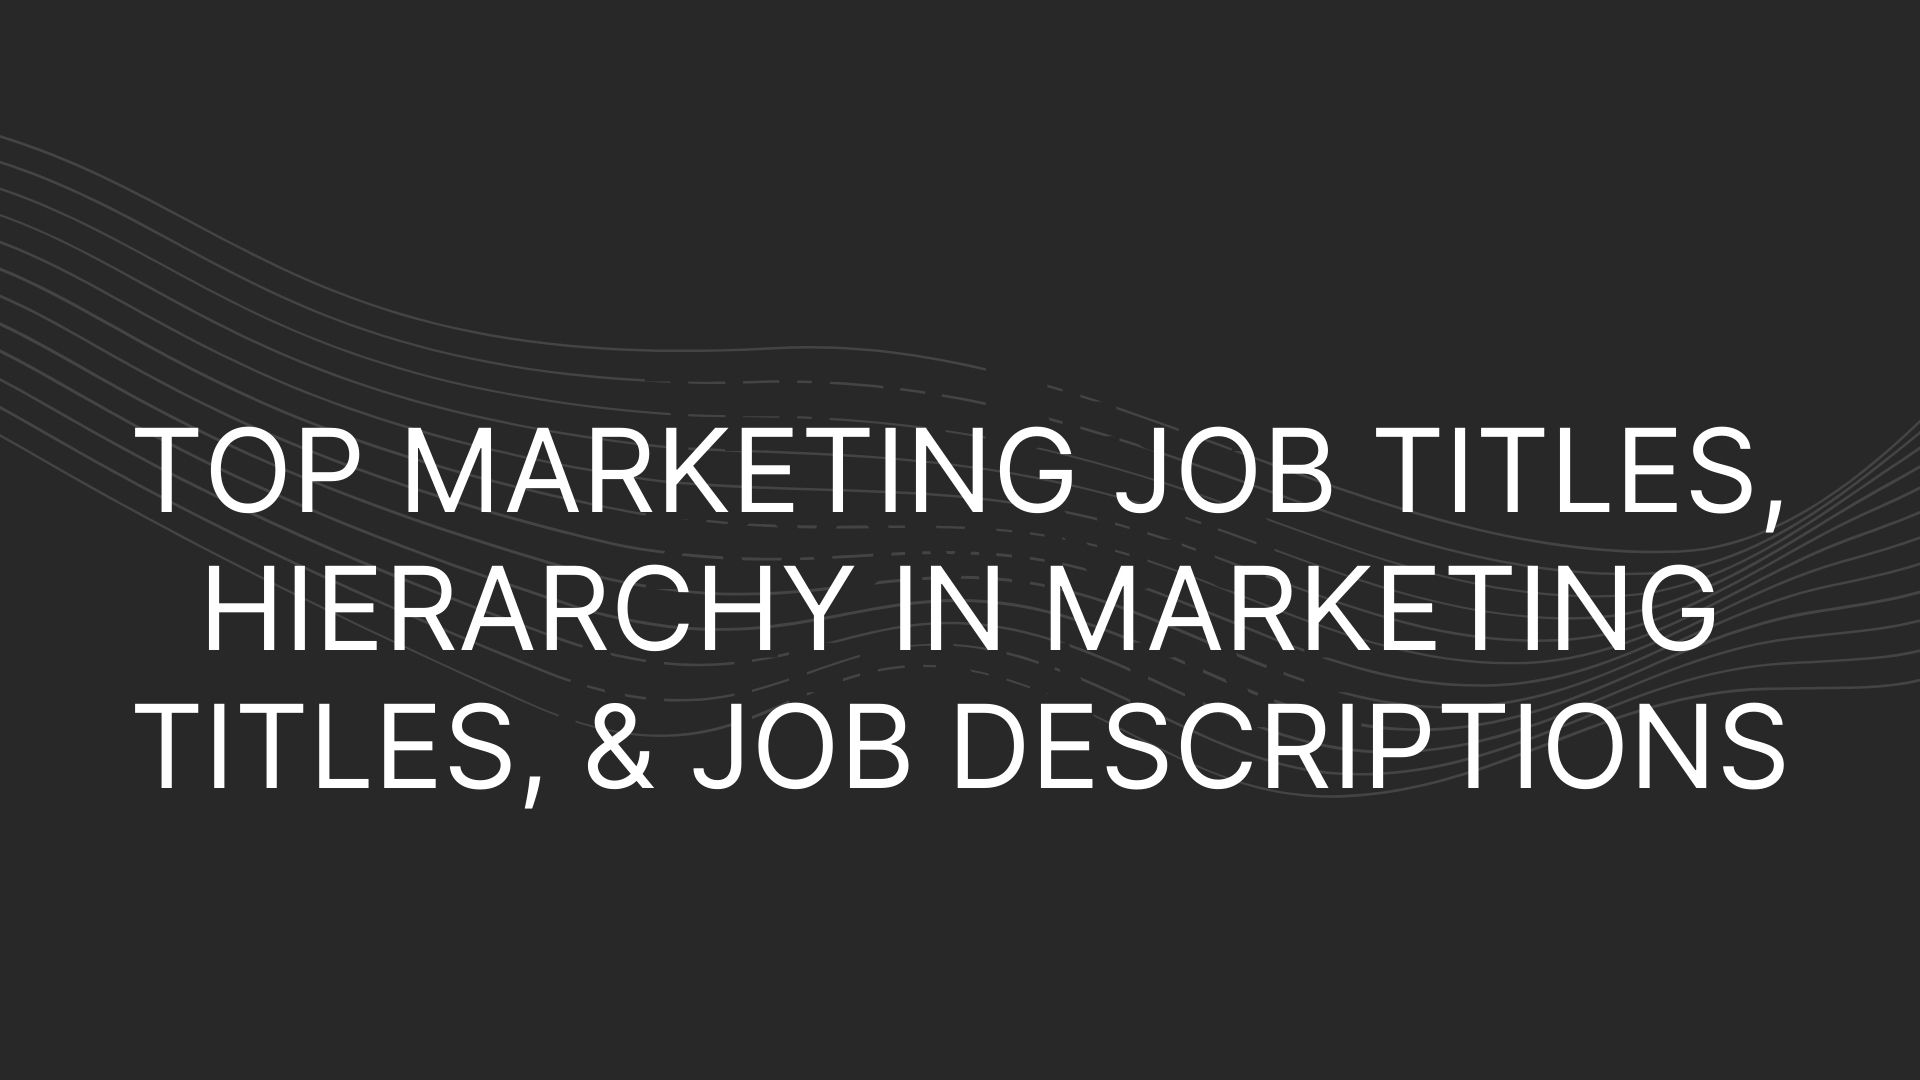 Top Marketing Job Titles